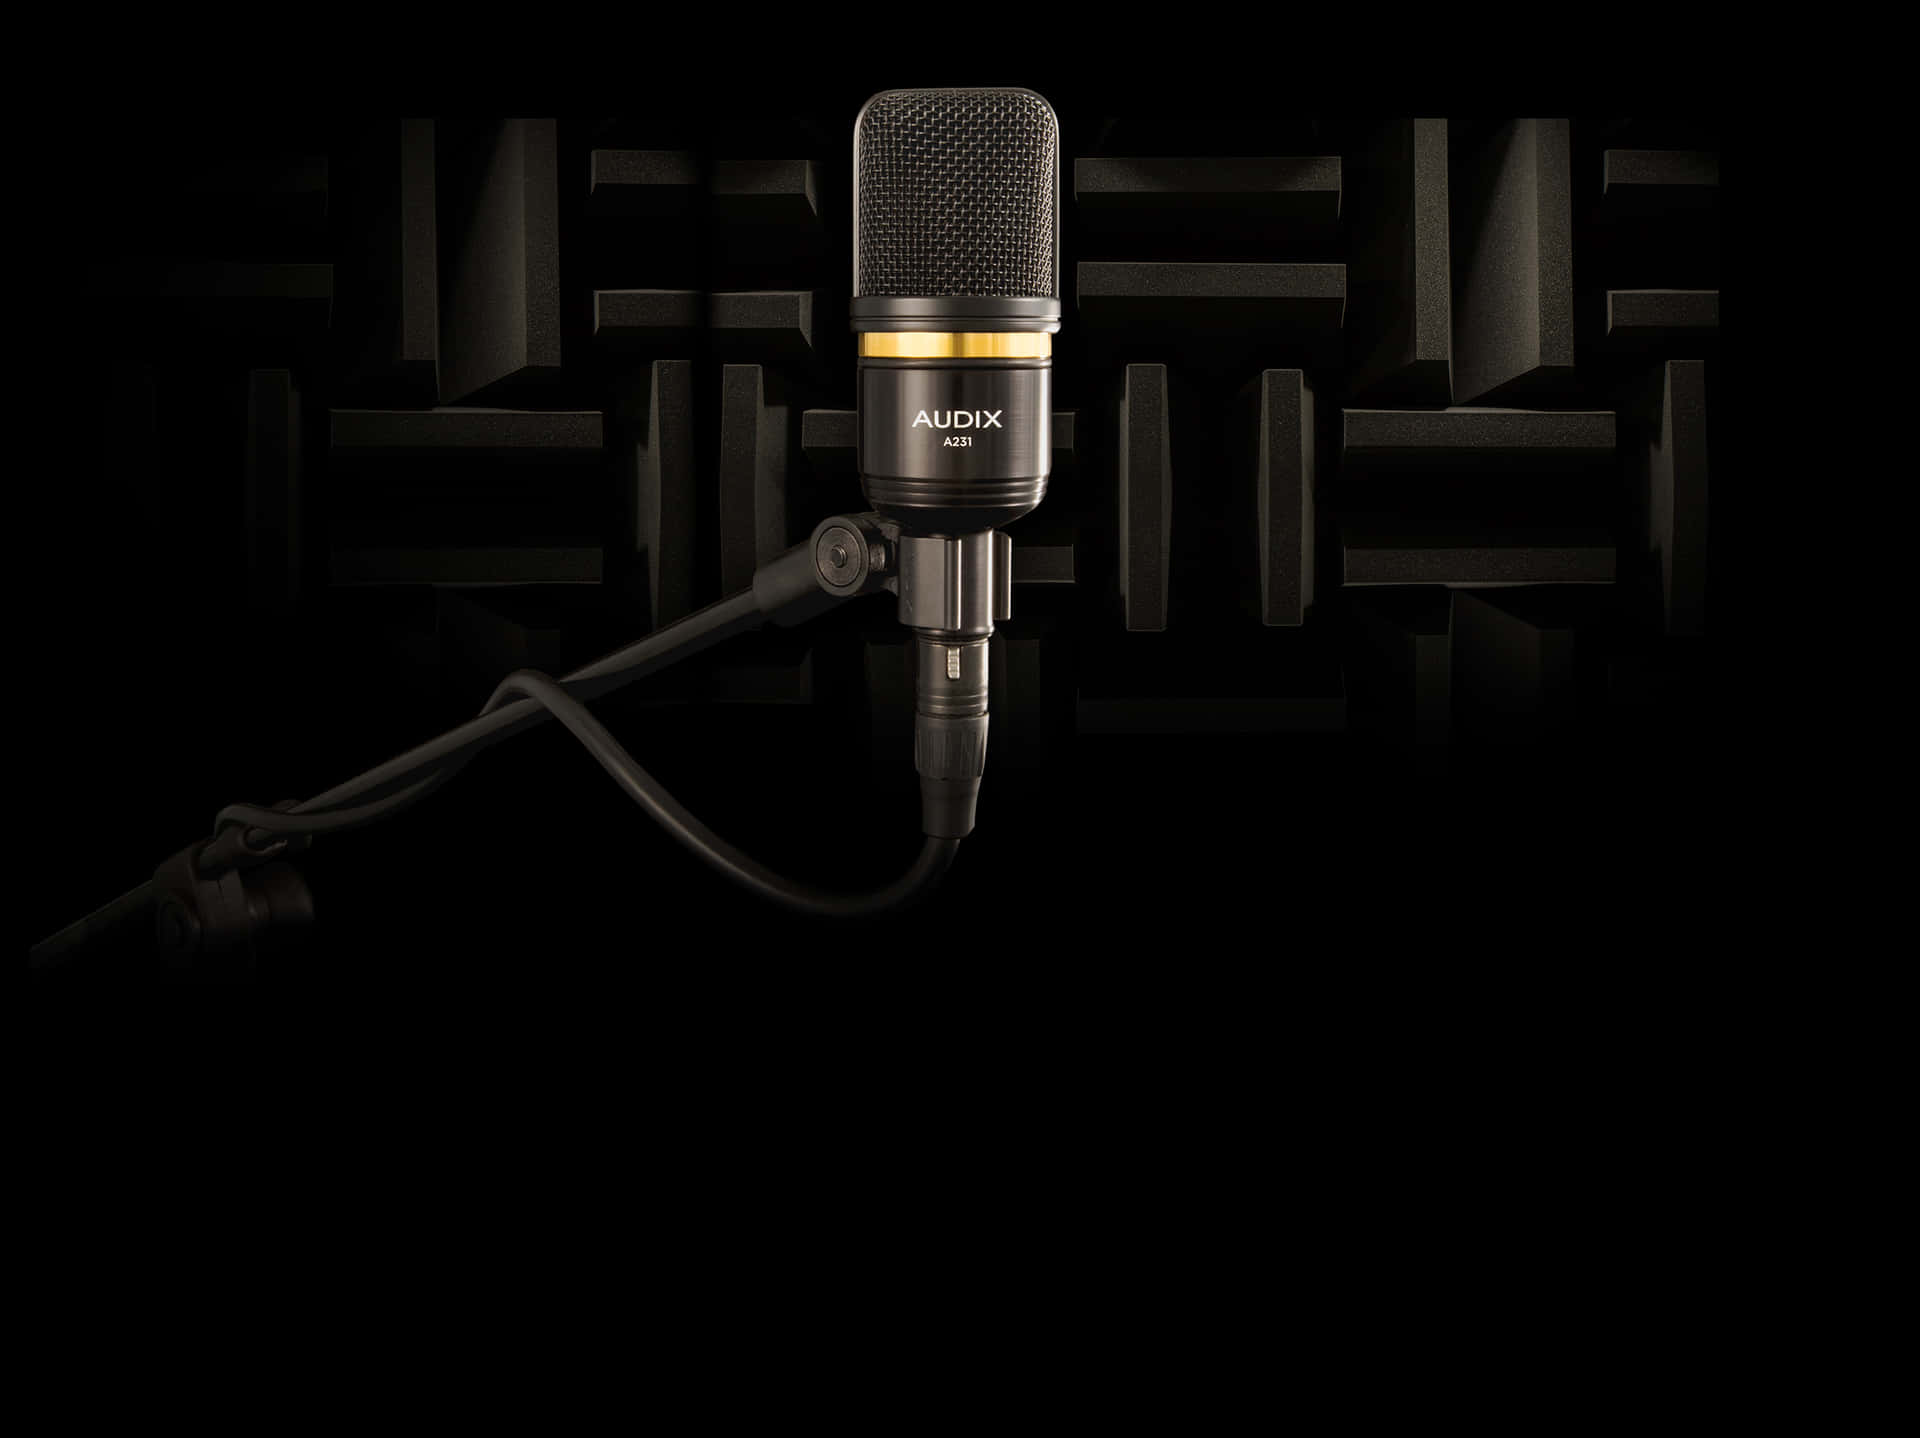 Audix A231 Condenser Studio Microphone Wallpaper